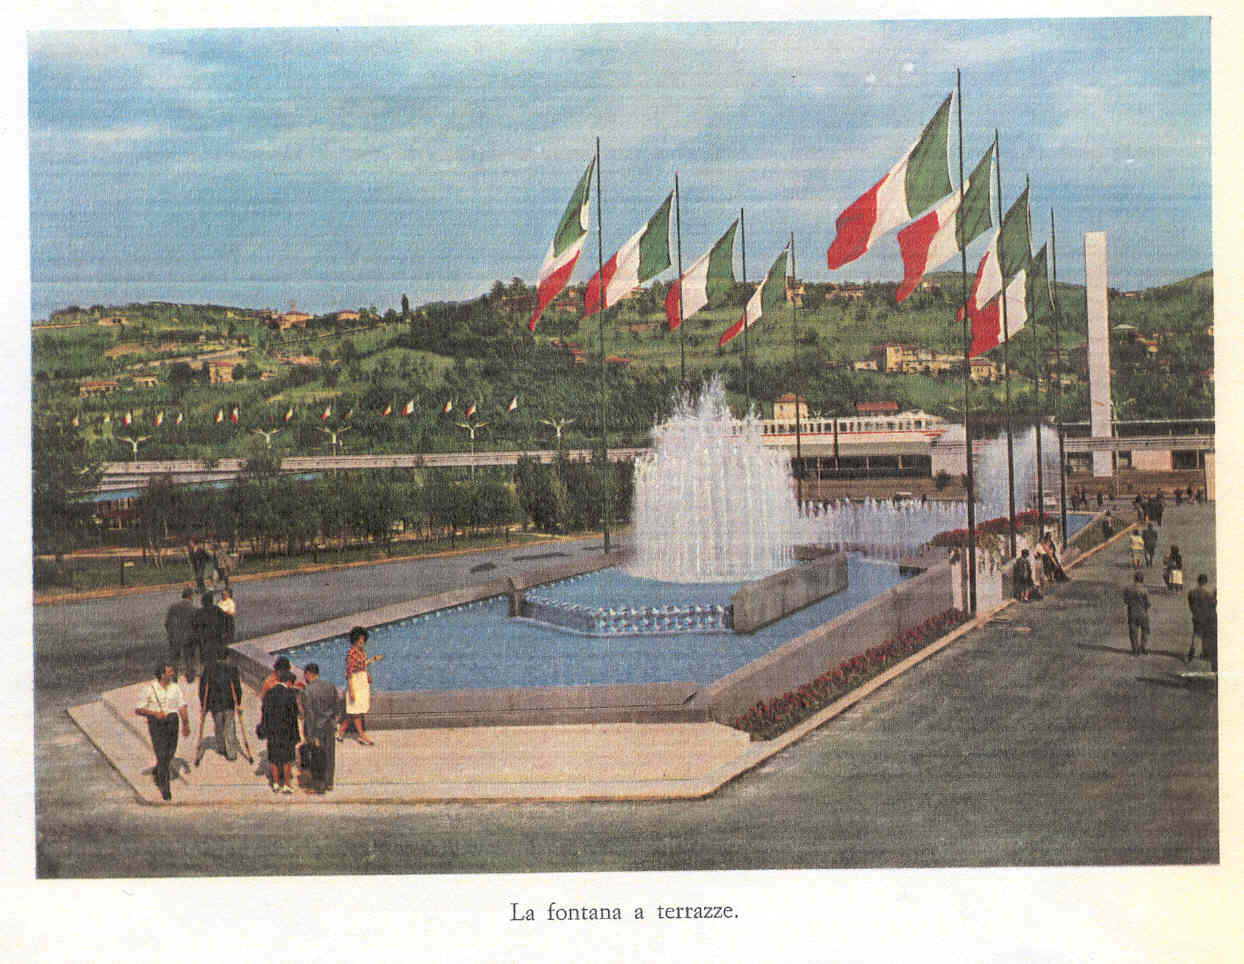 La fontana in un'immagine d'epoca